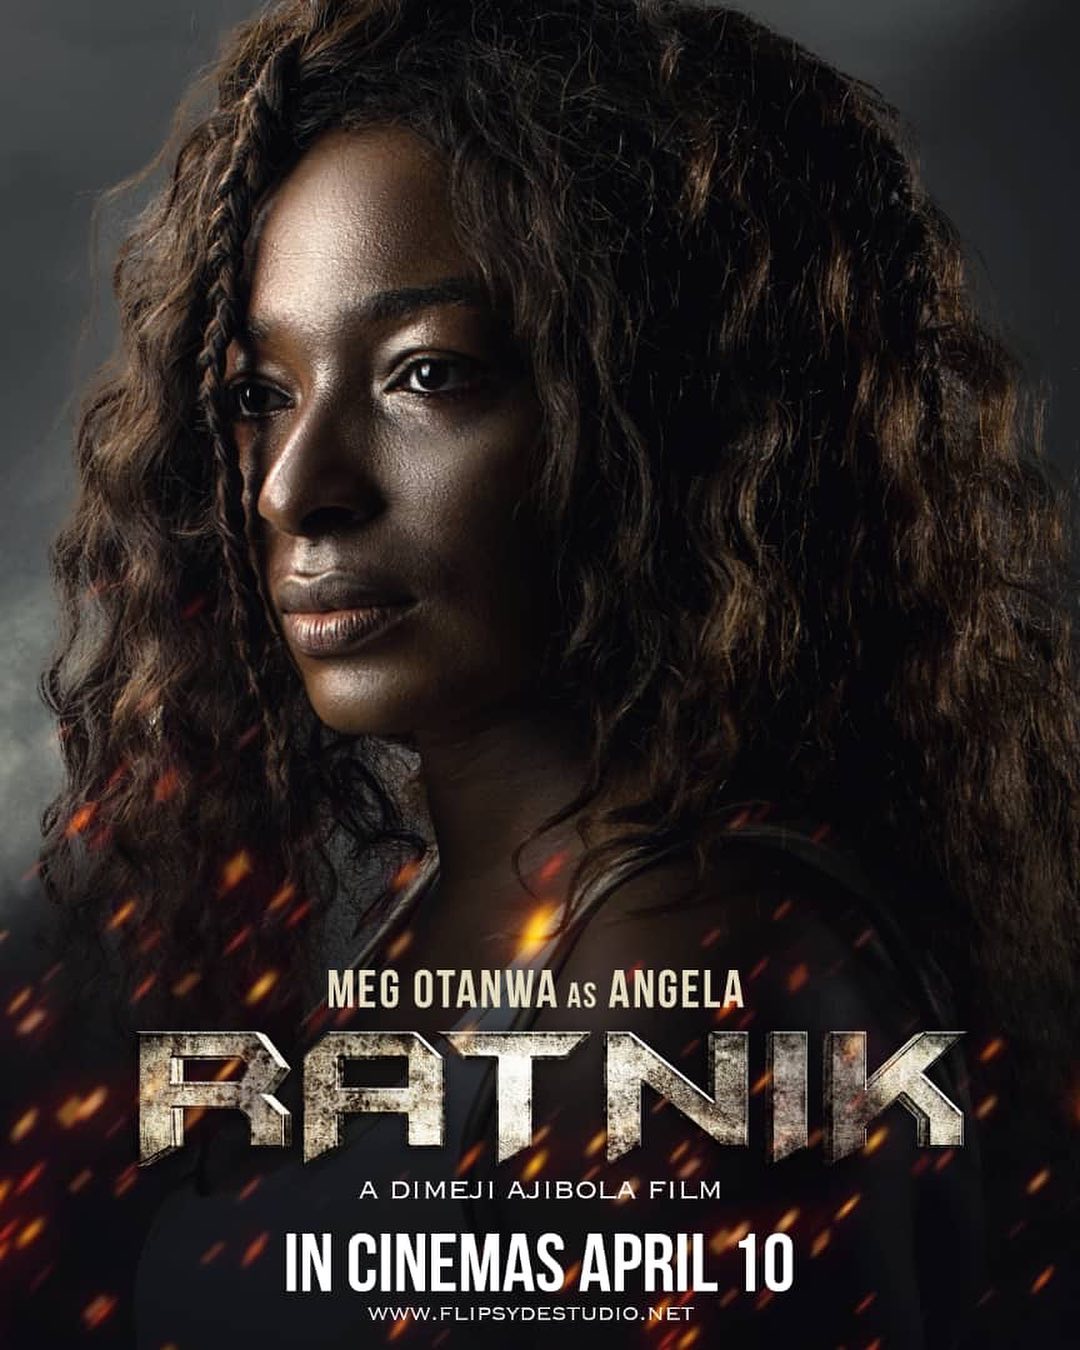 89630433 233562971401003 8578076312660612076 n - Nigerian Sci-Fi Adventure Movie Ratnik is Ready + Exclusive Posters